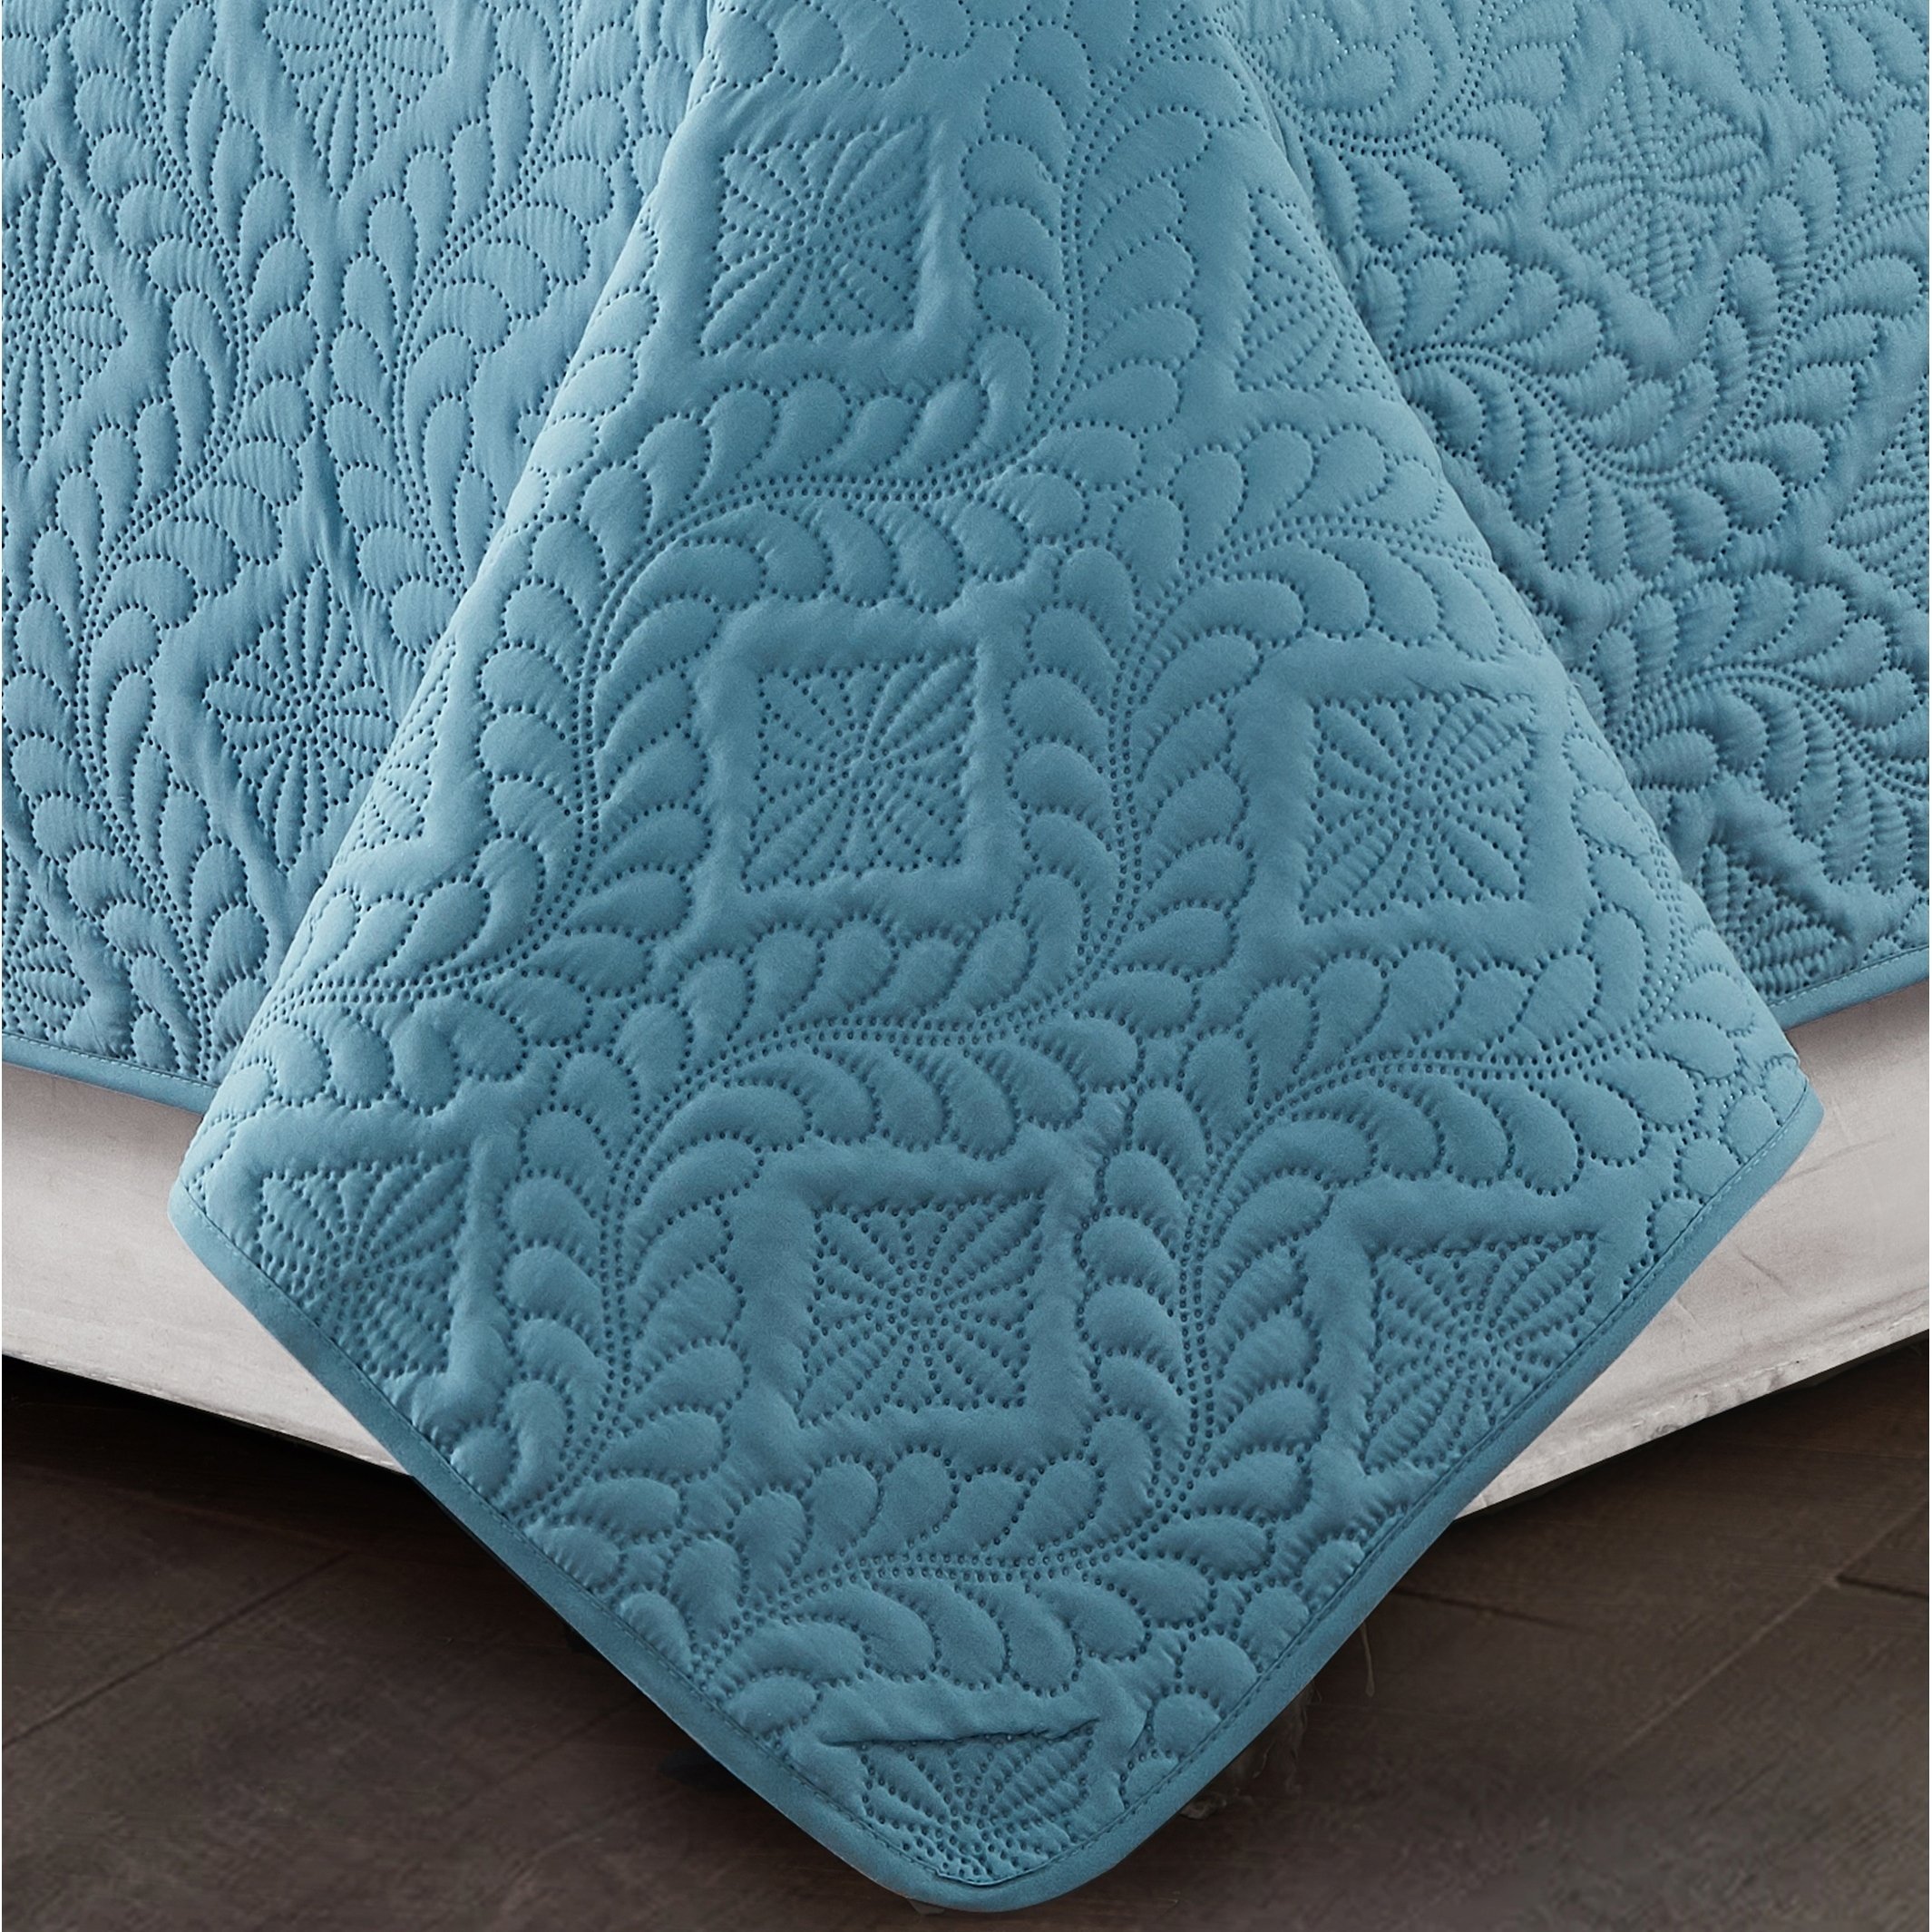 ultrasonic pinsonic quilt bedspread set